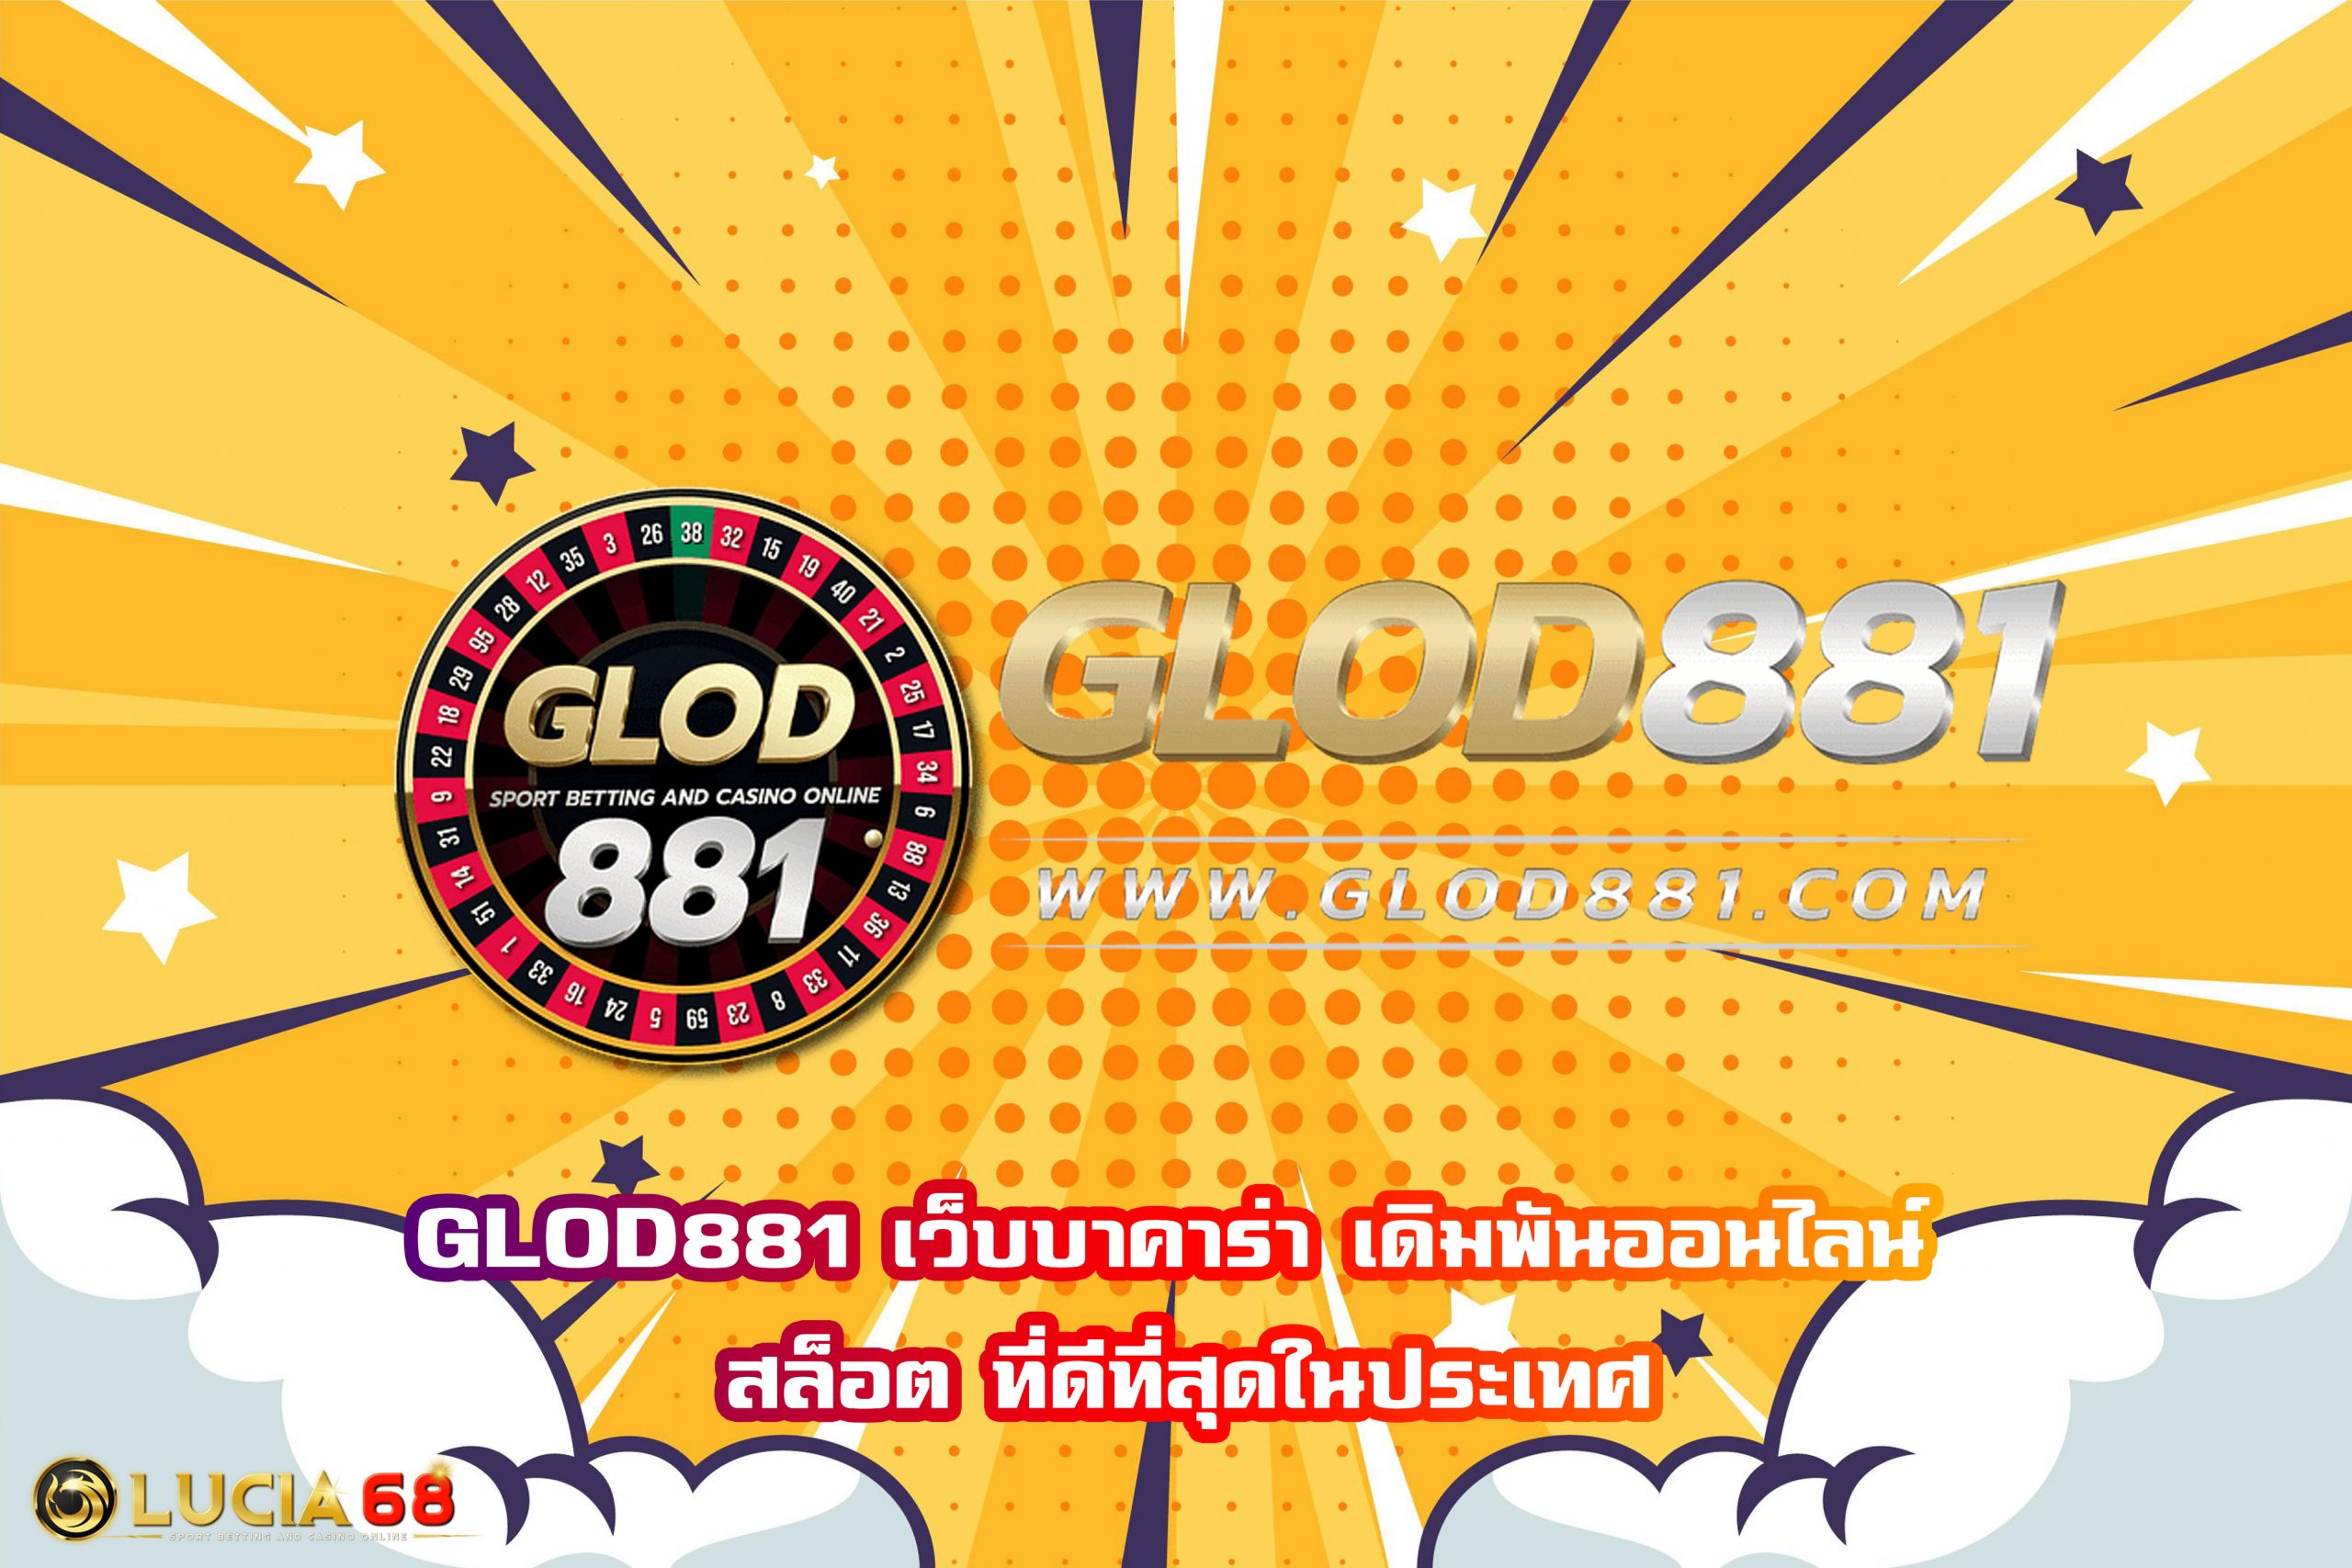 GLOD881 เว็บบาคาร่า เดิมพันออนไลน์ สล็อต ที่ดีที่สุดในประเทศ